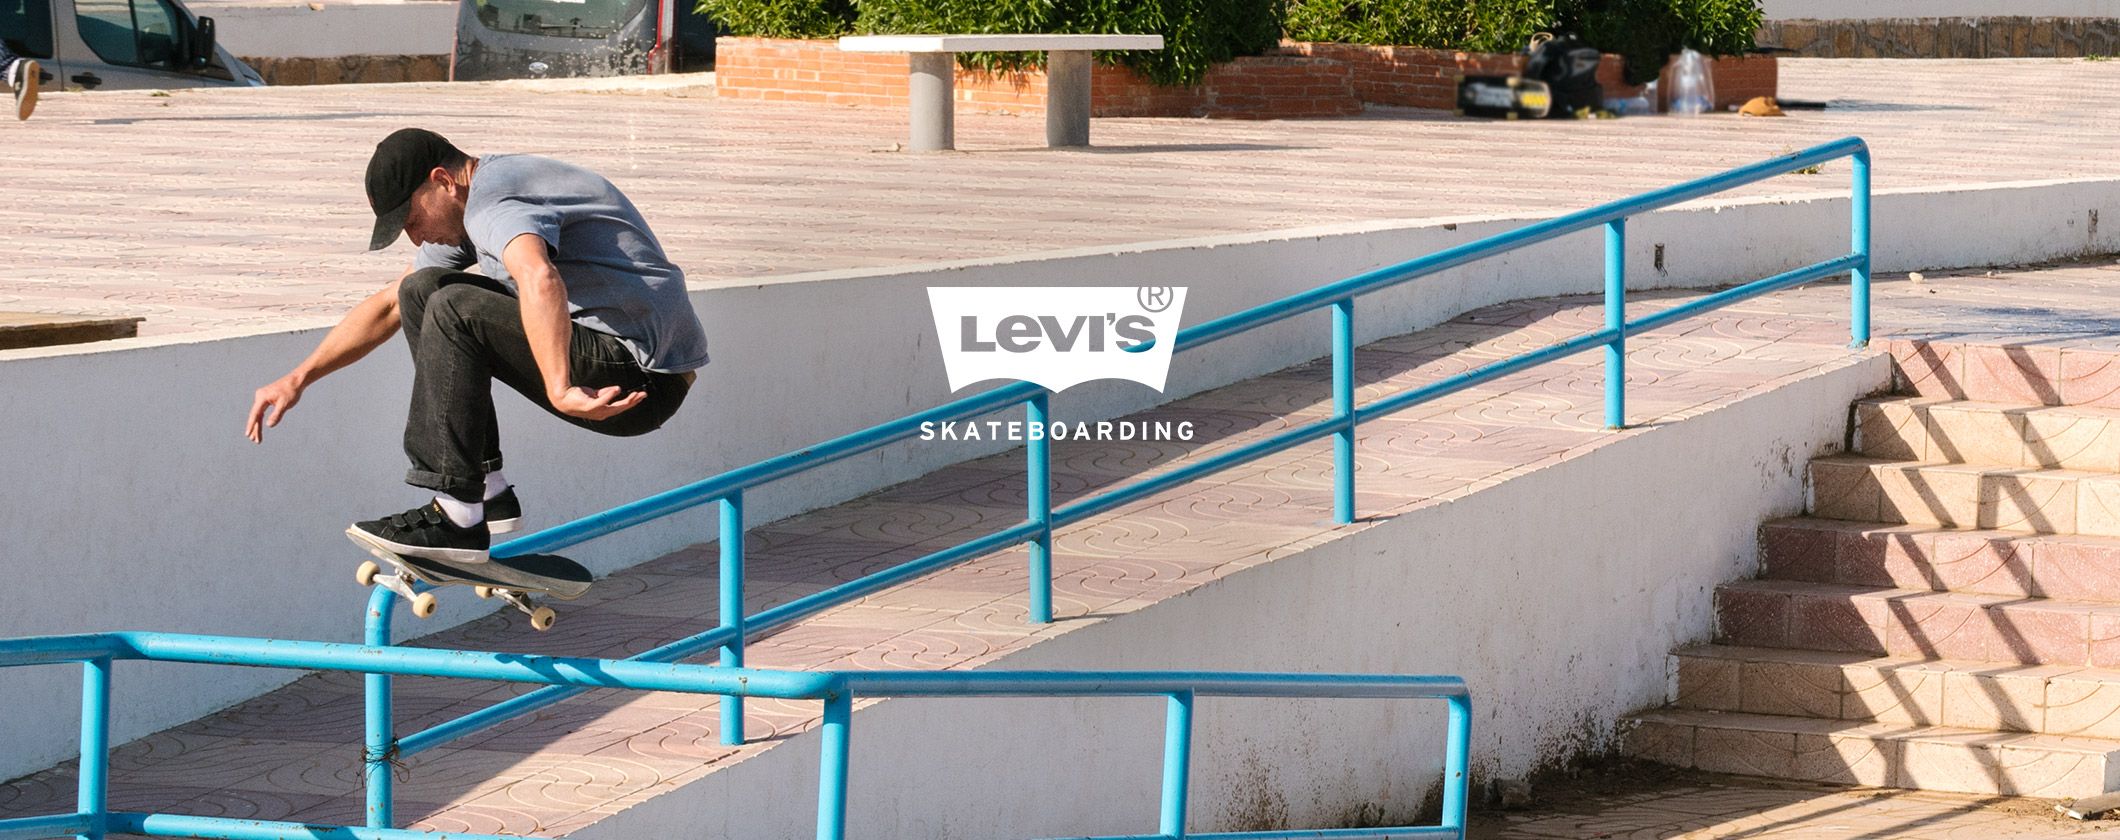 levis skateboarding chino